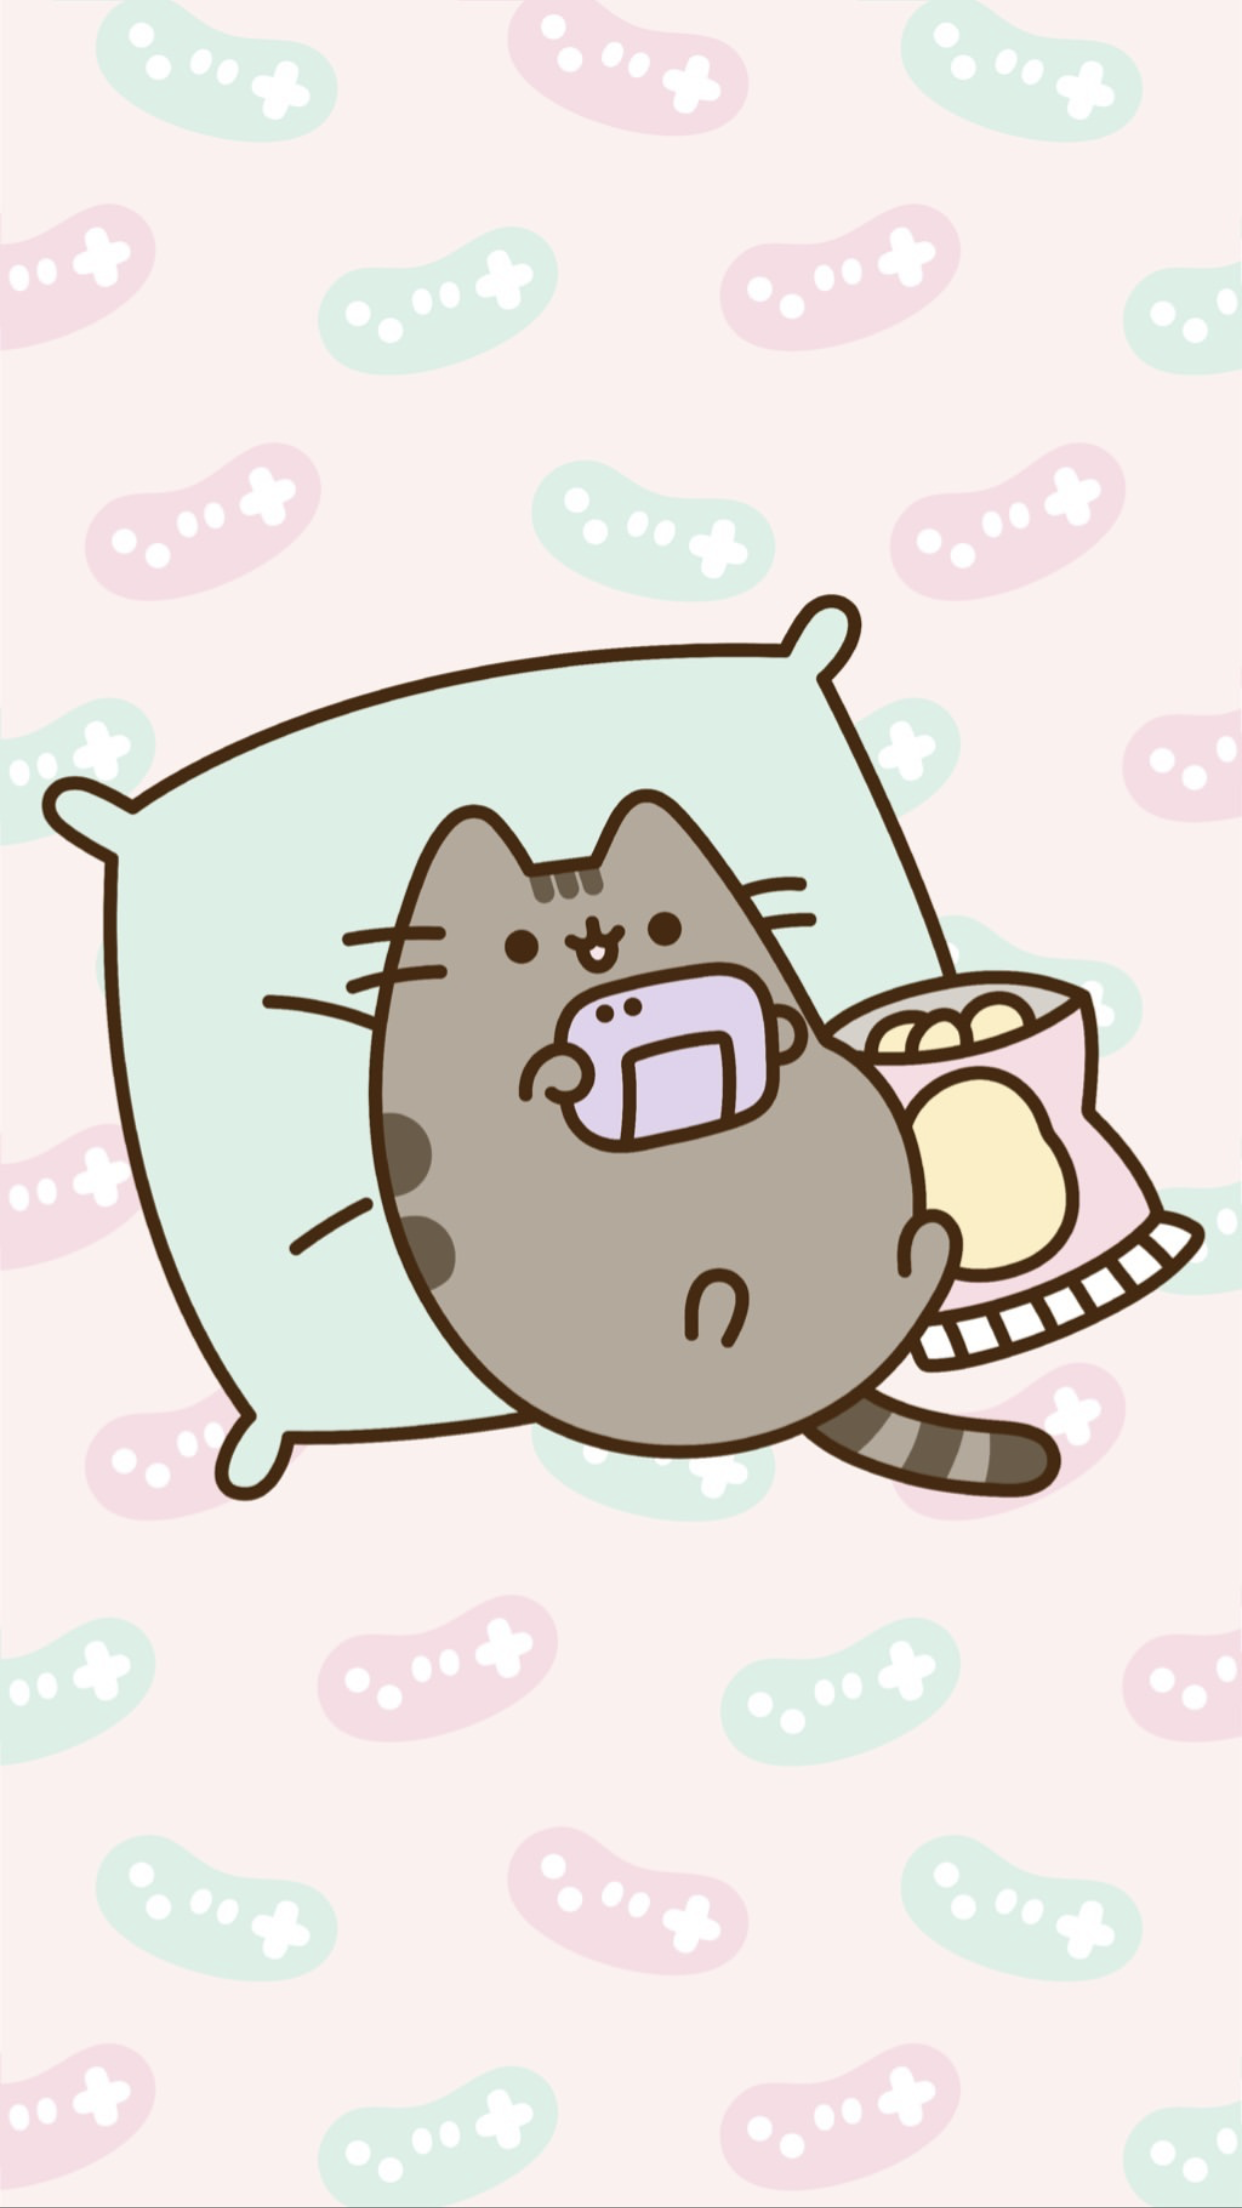 pusheen the cat iphone wallpaper background pusheen gamer kitty. Pusheen cute, Pusheen cat, Kawaii wallpaper